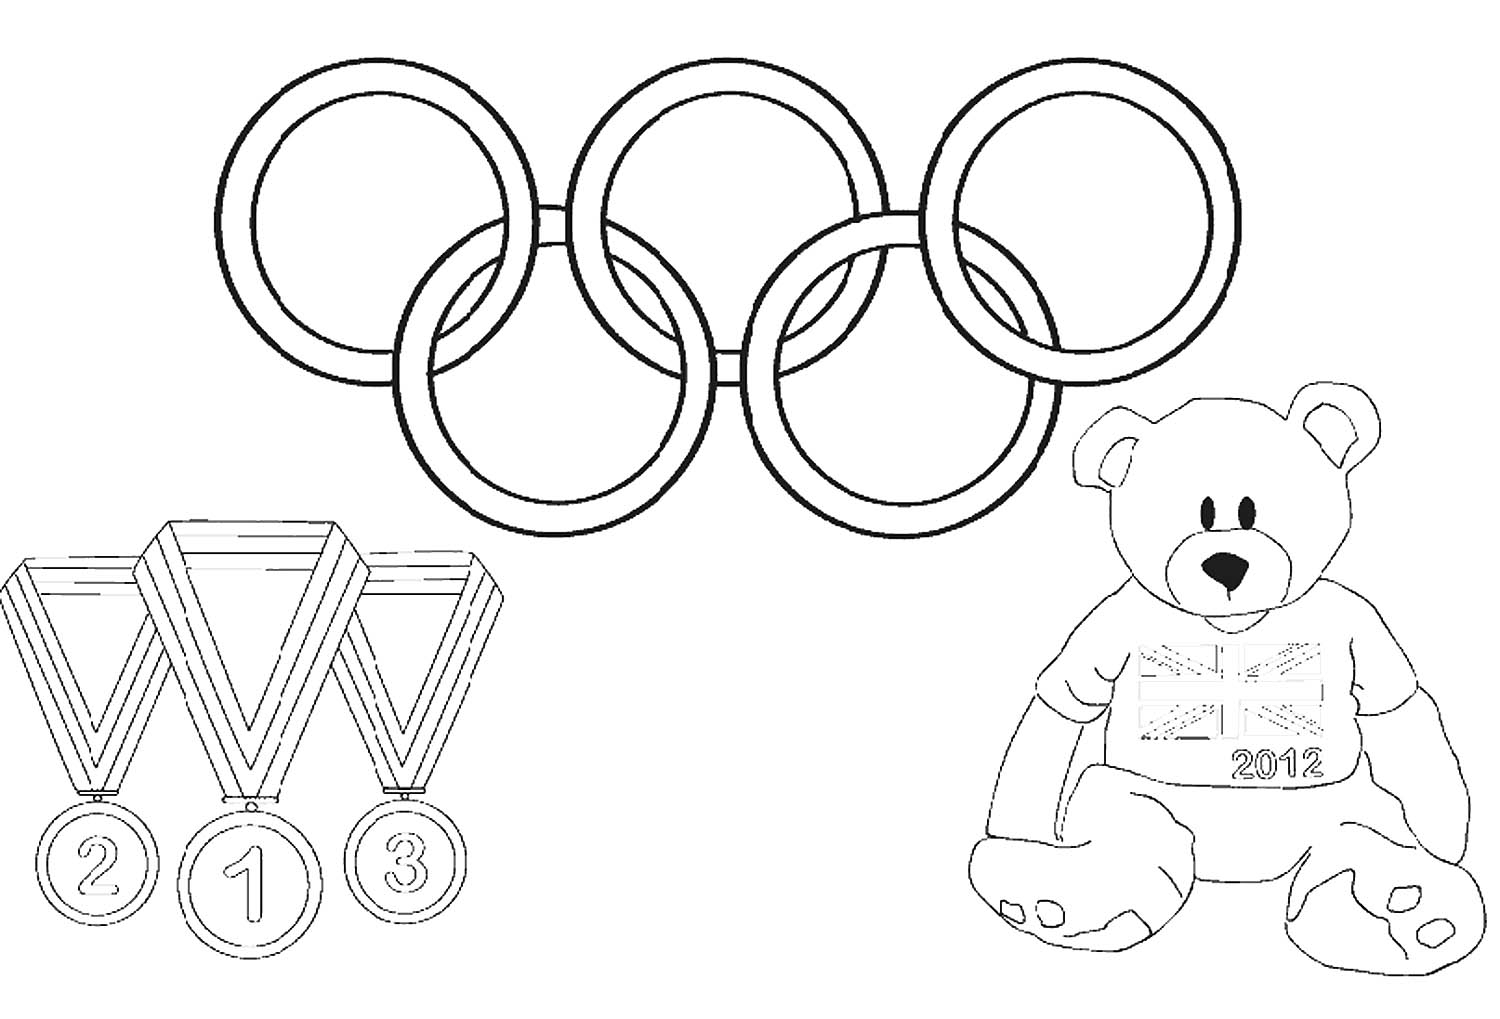 Сувенир Олимпиады Сочи 2014 